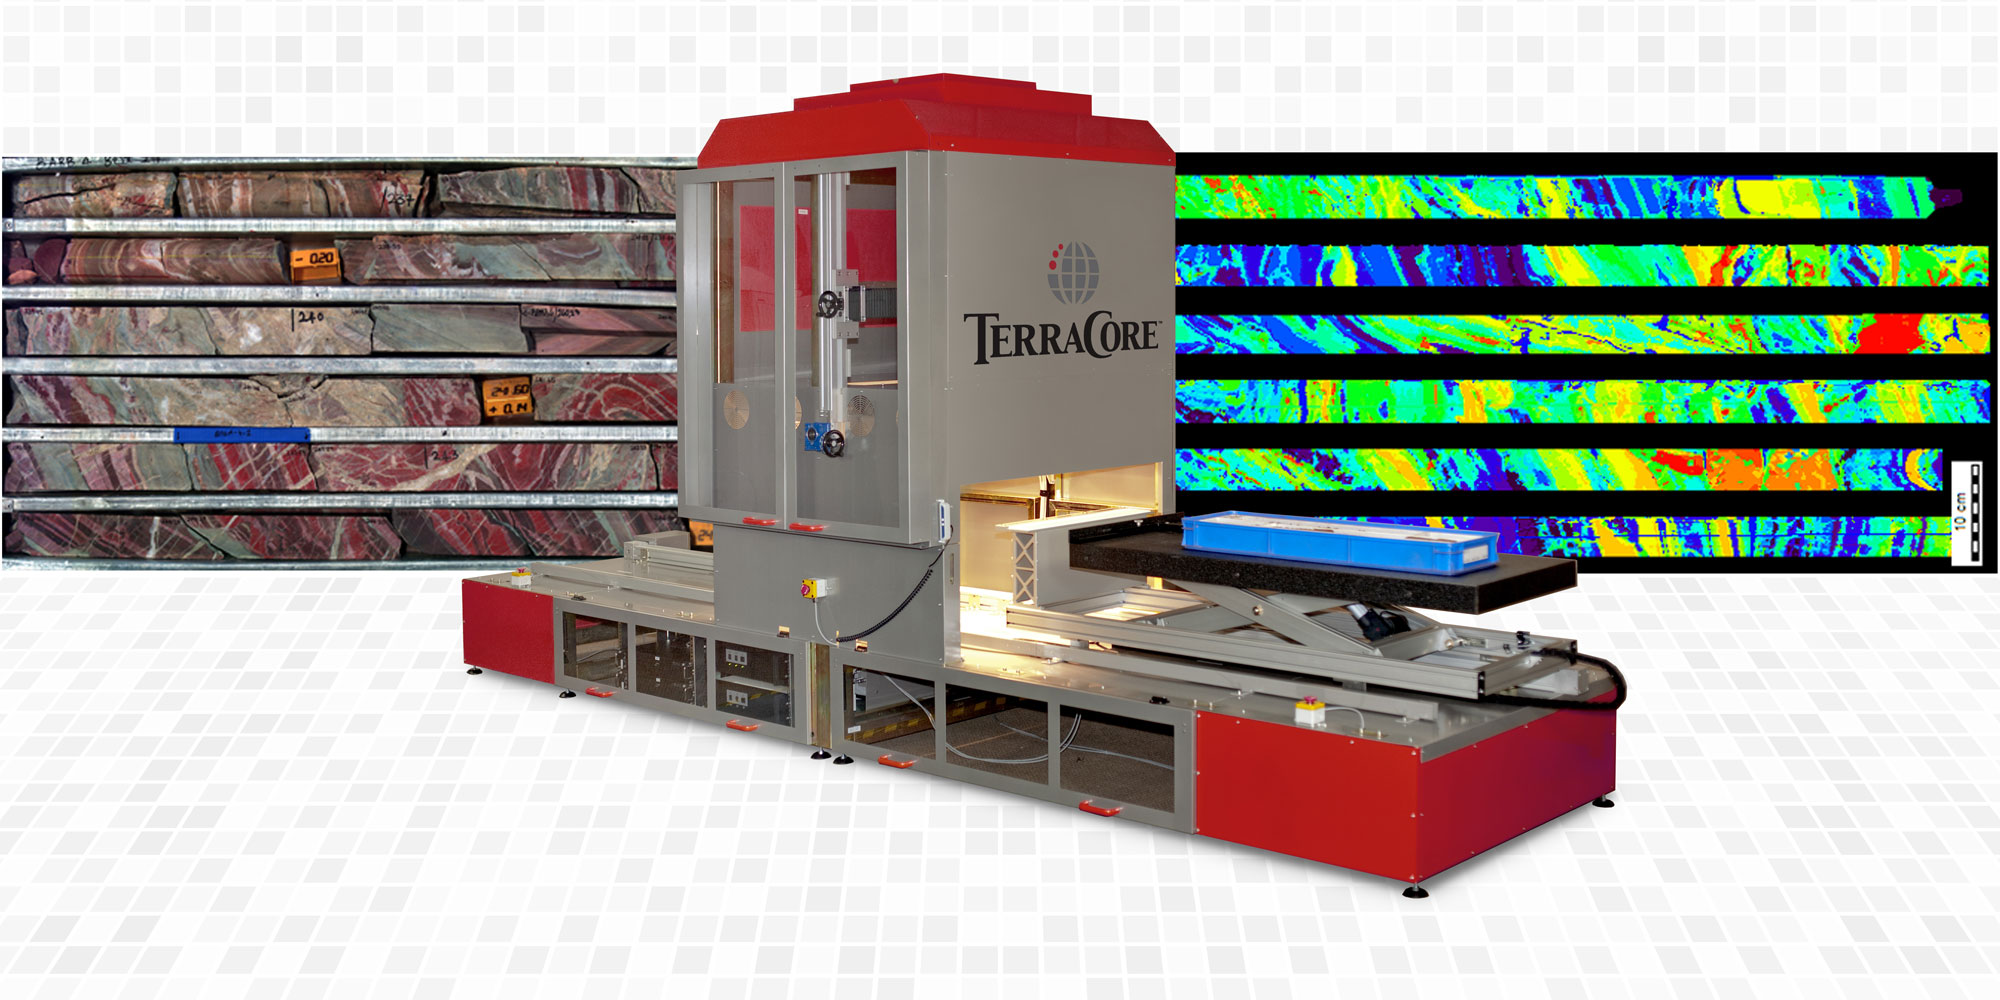 TerraCore Core Image Spectrometer